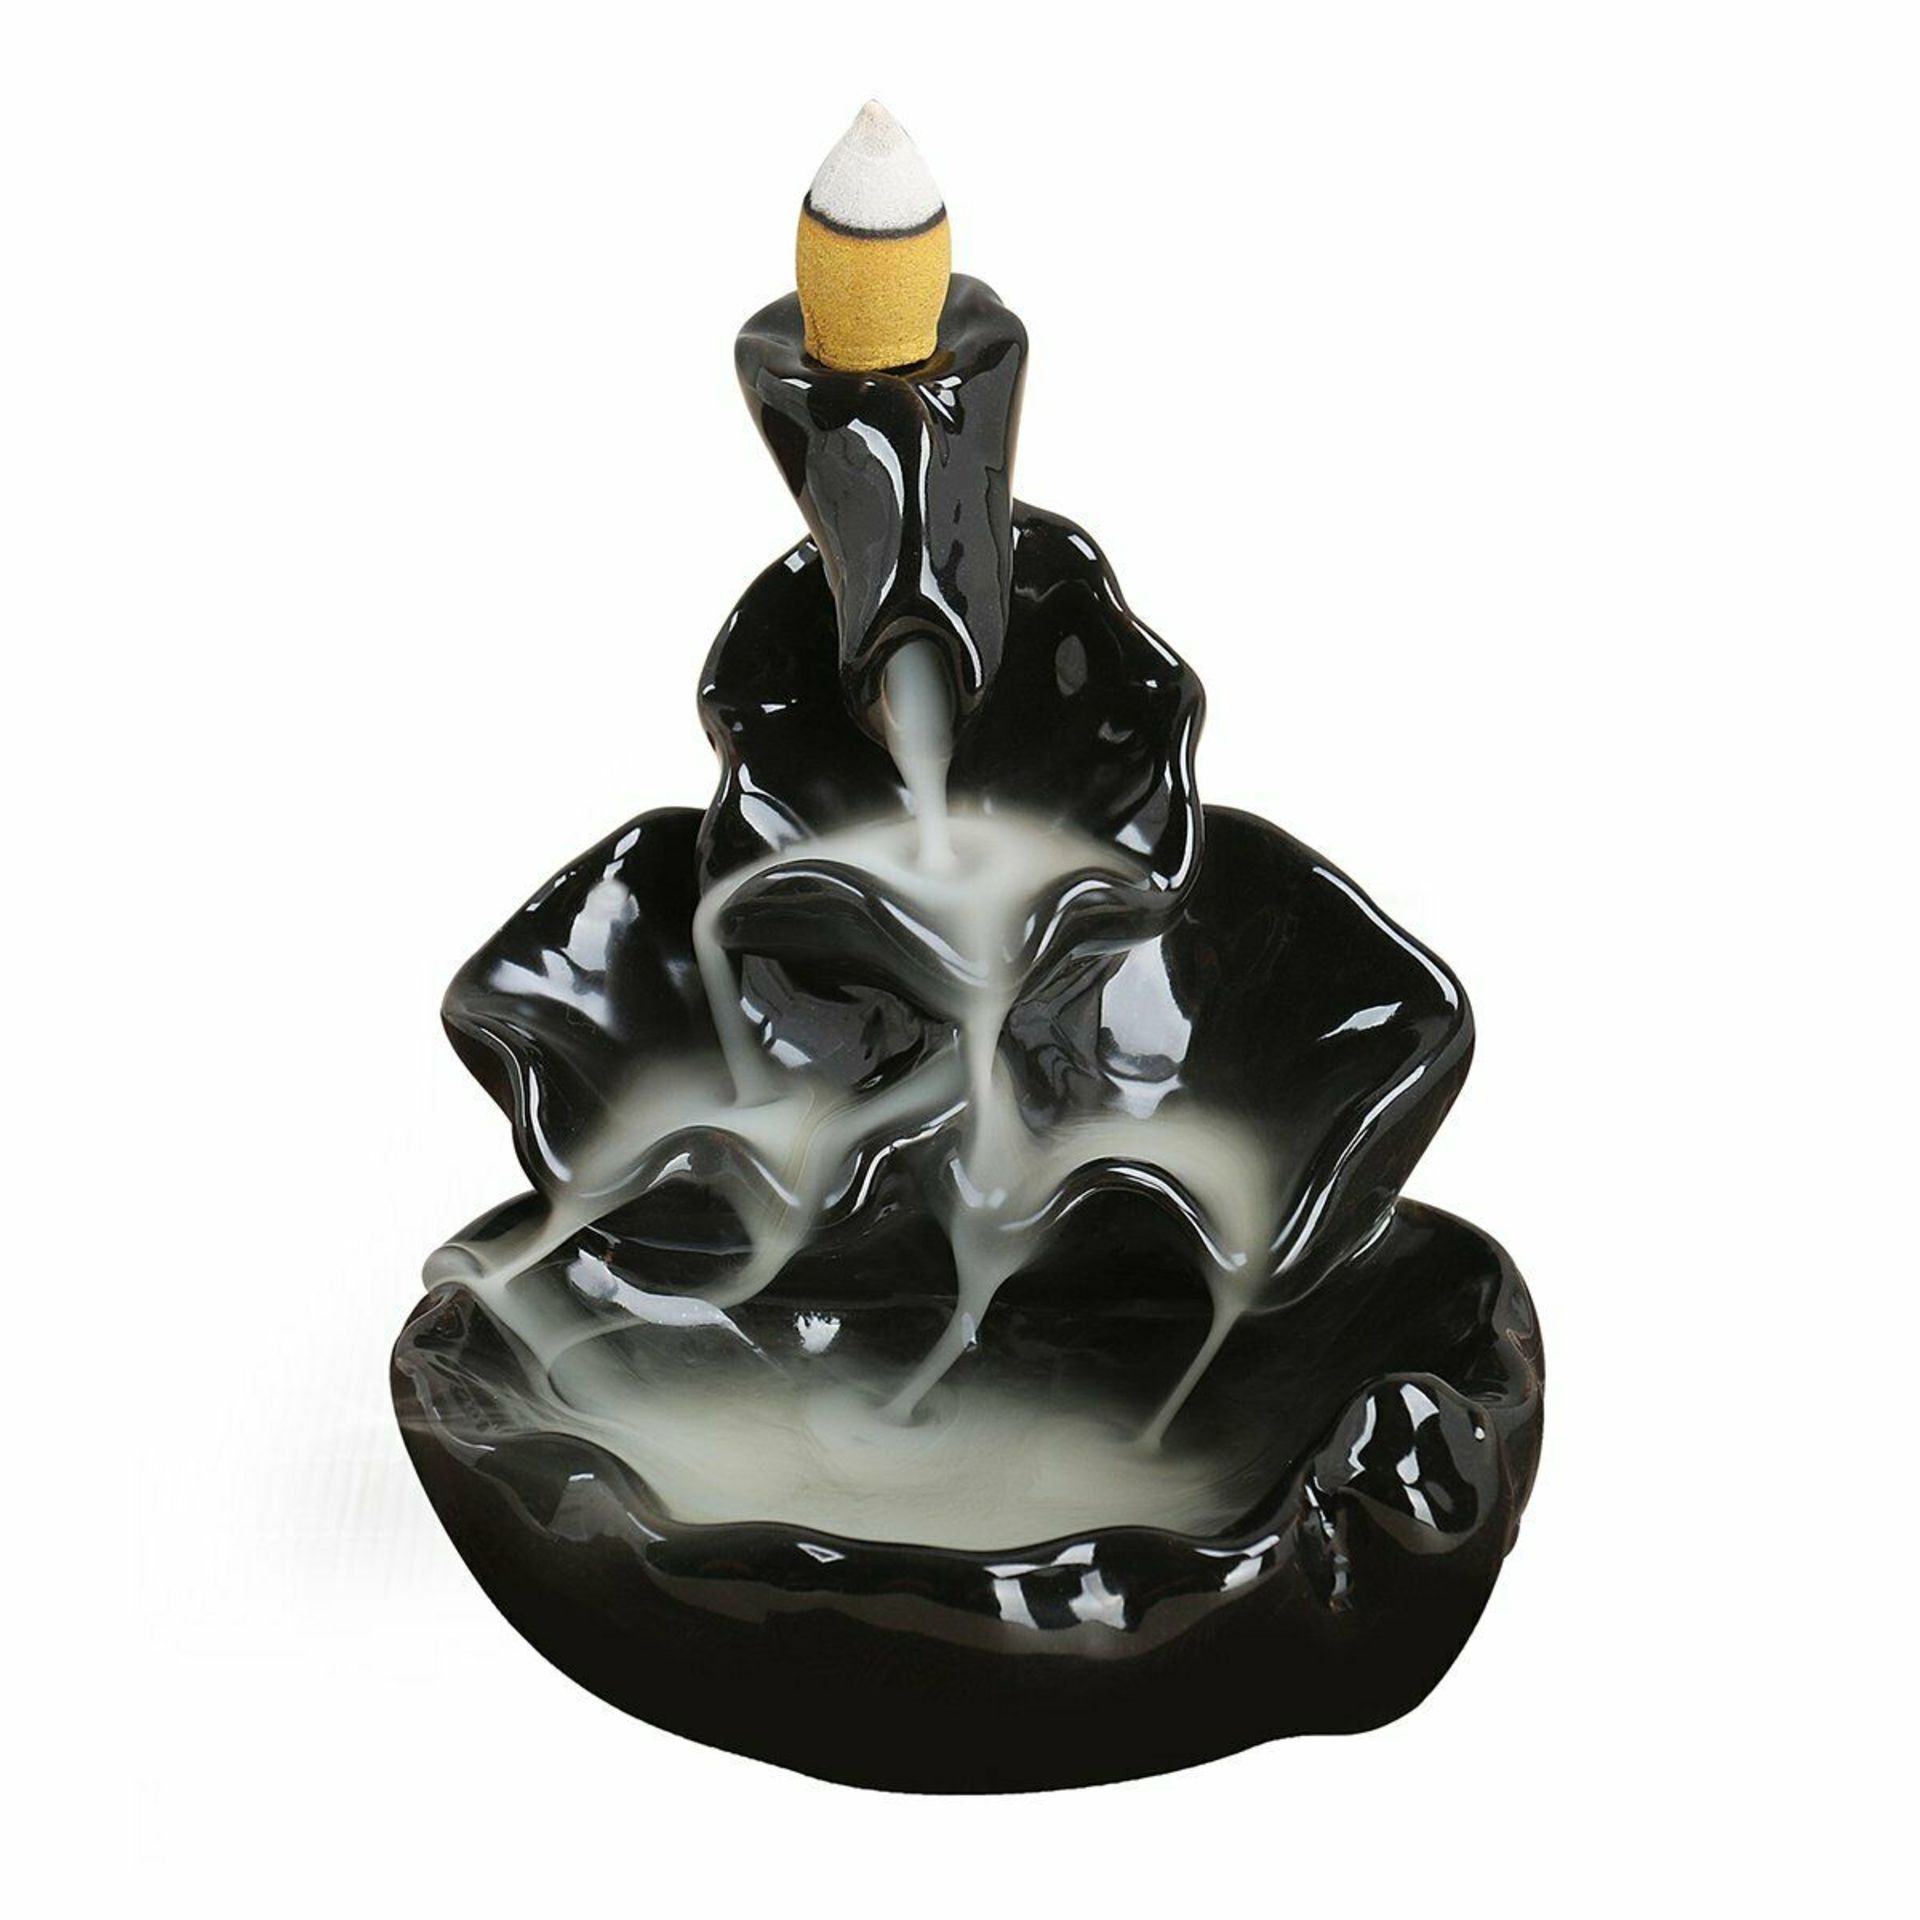 10 x Pixnor Ceramic Glaze Incense Smoke Cone Burner Backflow Censer Tower Holder - Image 2 of 3